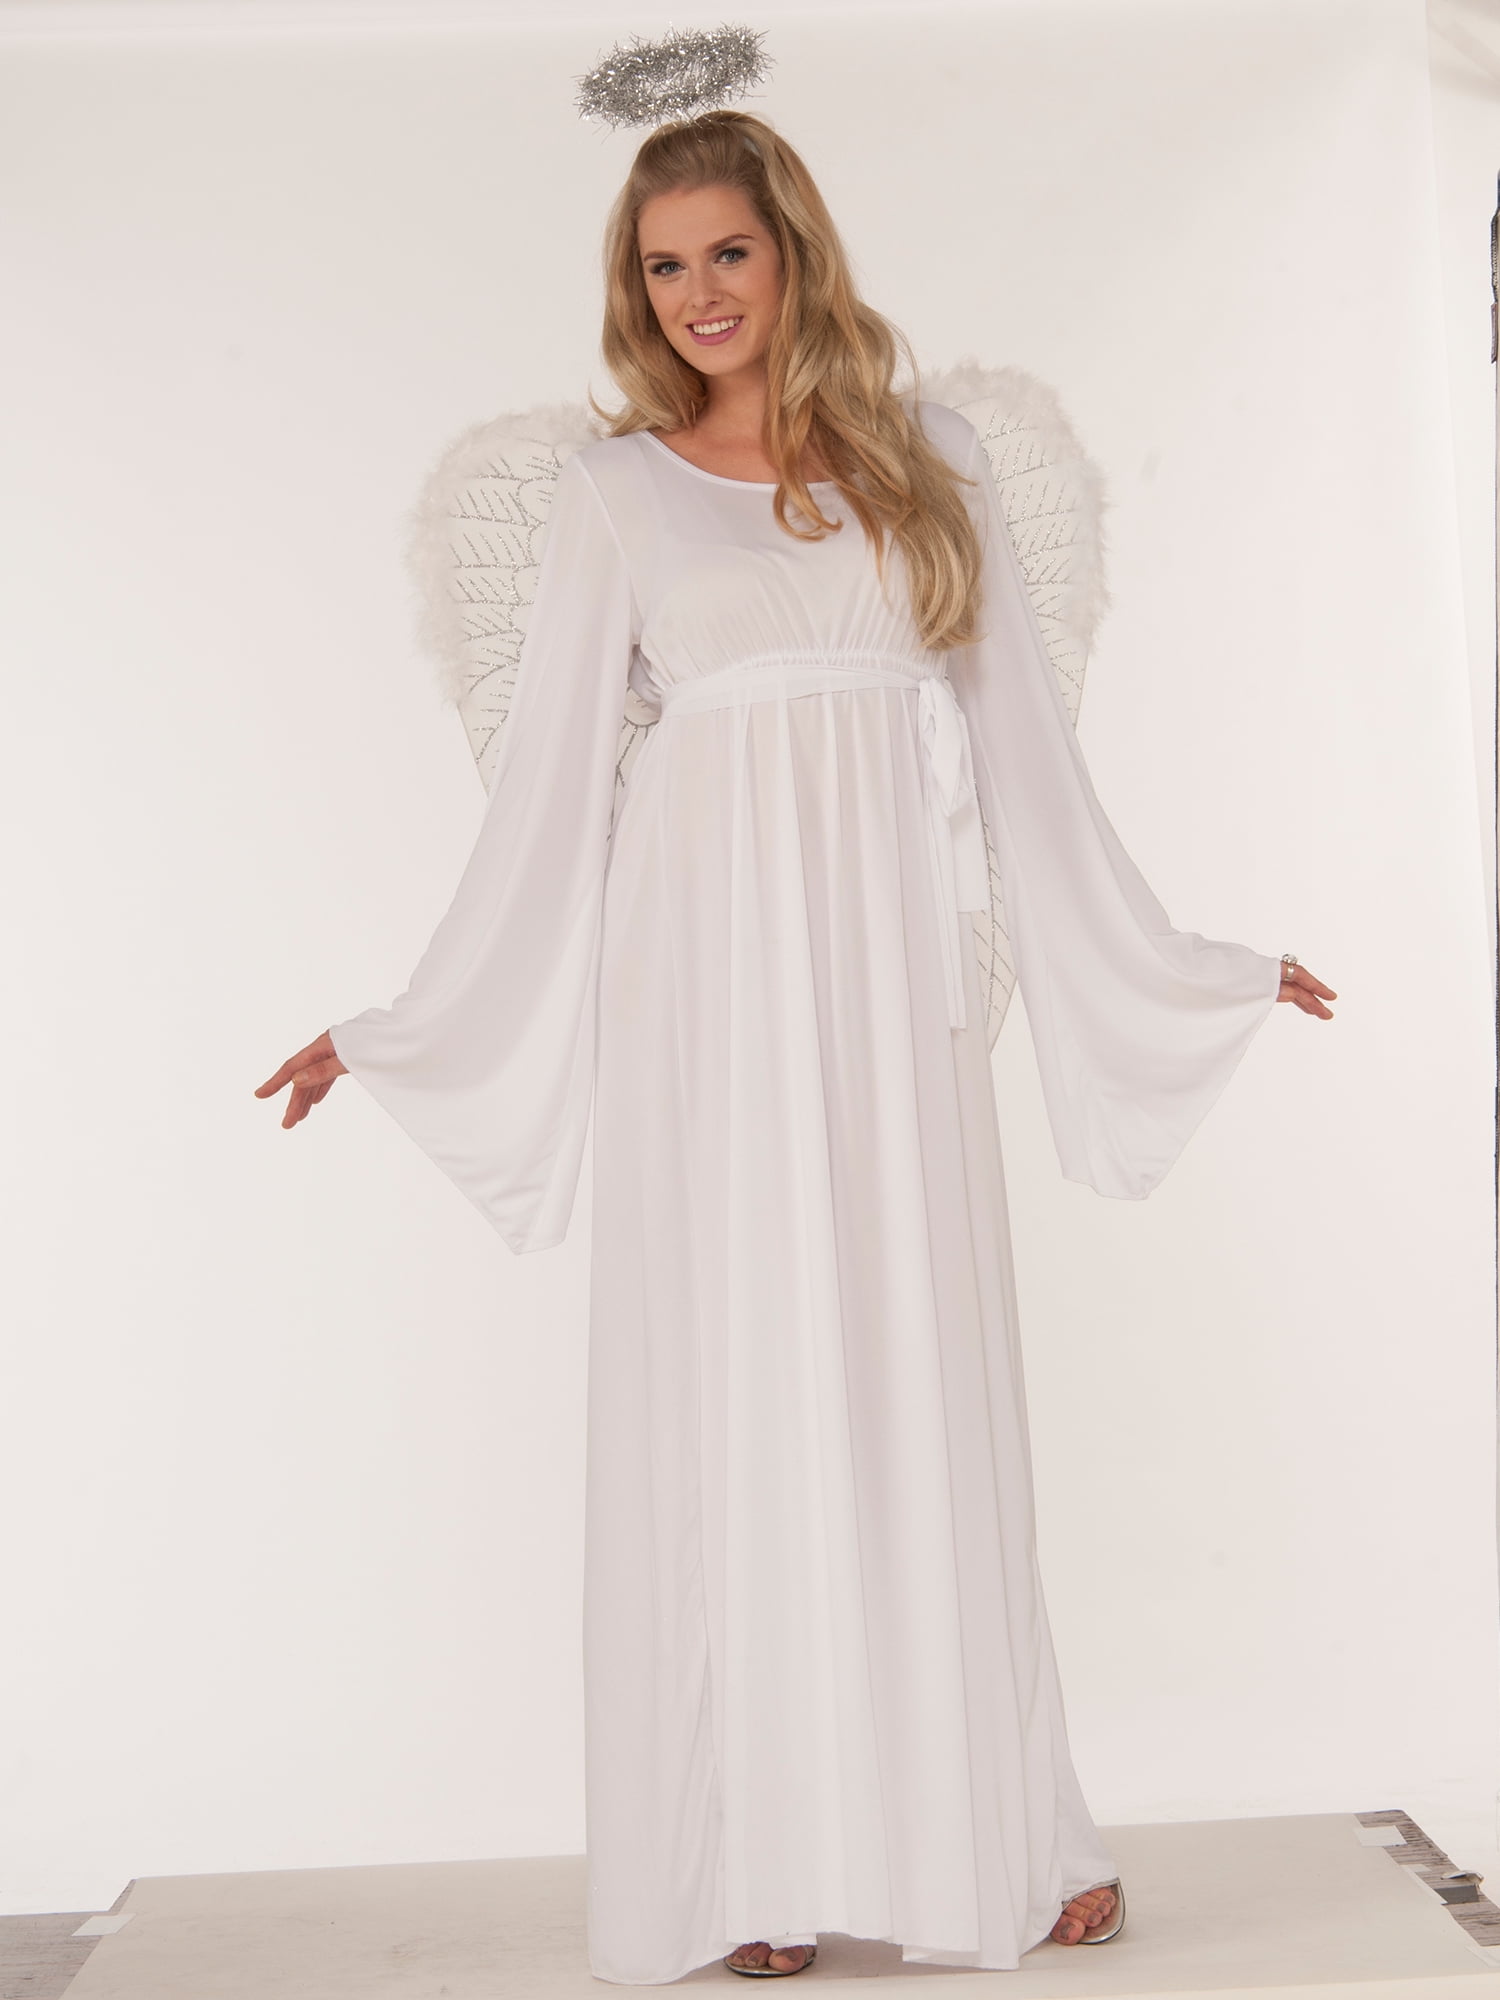 Plus Size Angel Costume - Walmart.com